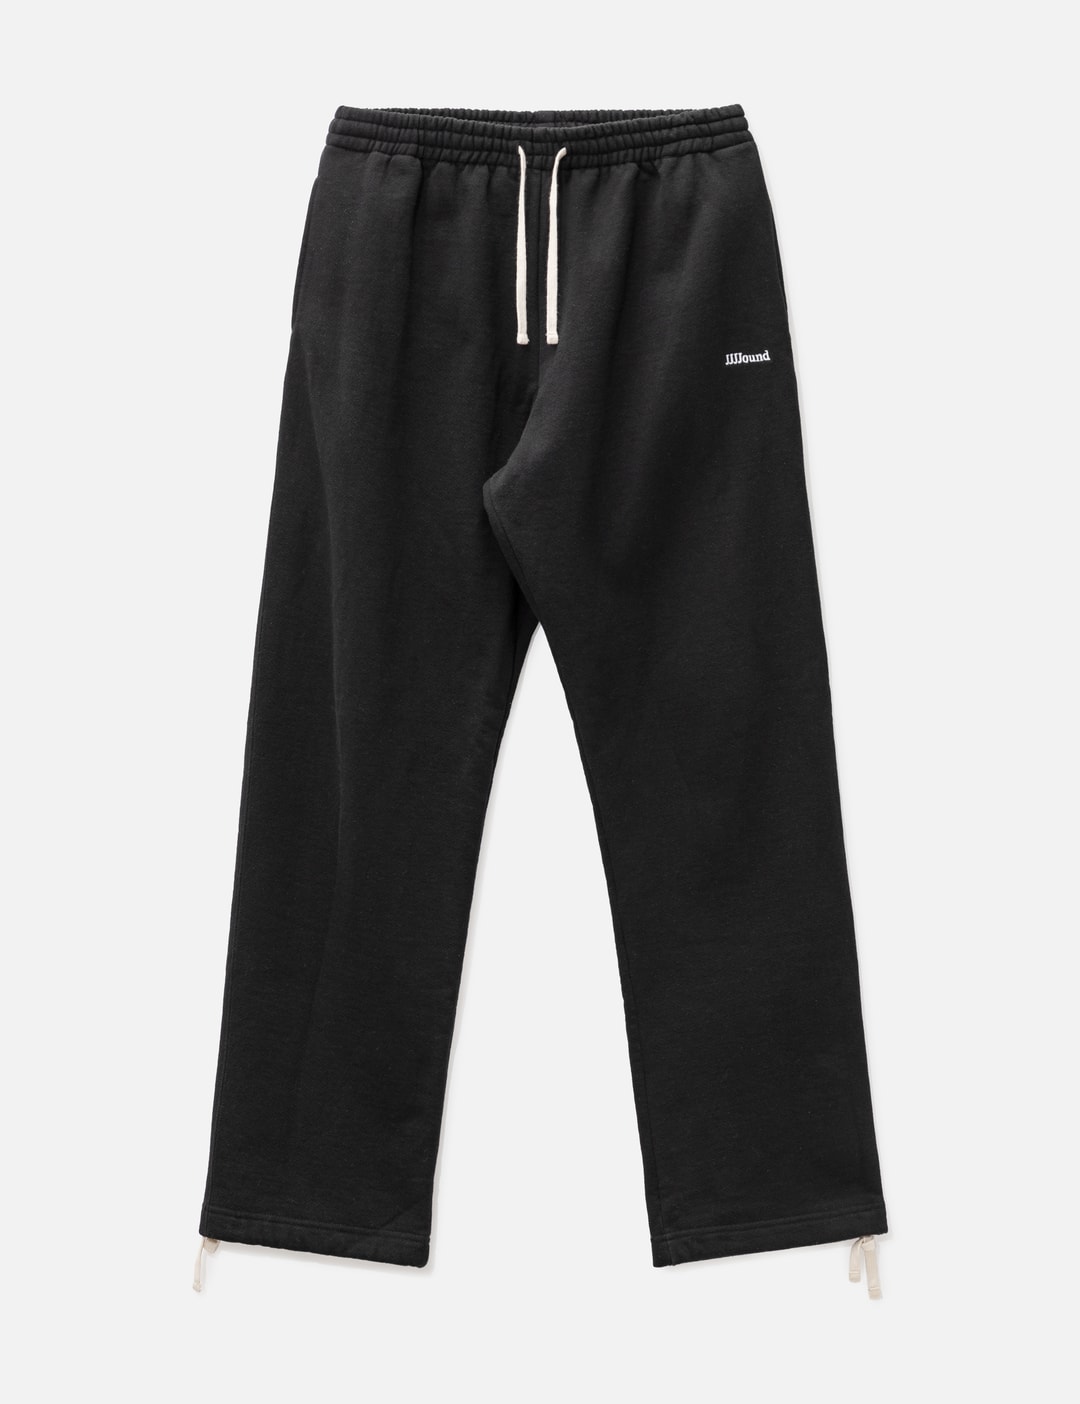 JJJJound - JJJJound Cotton Sweatpants | HBX - Globally Curated Fashion ...